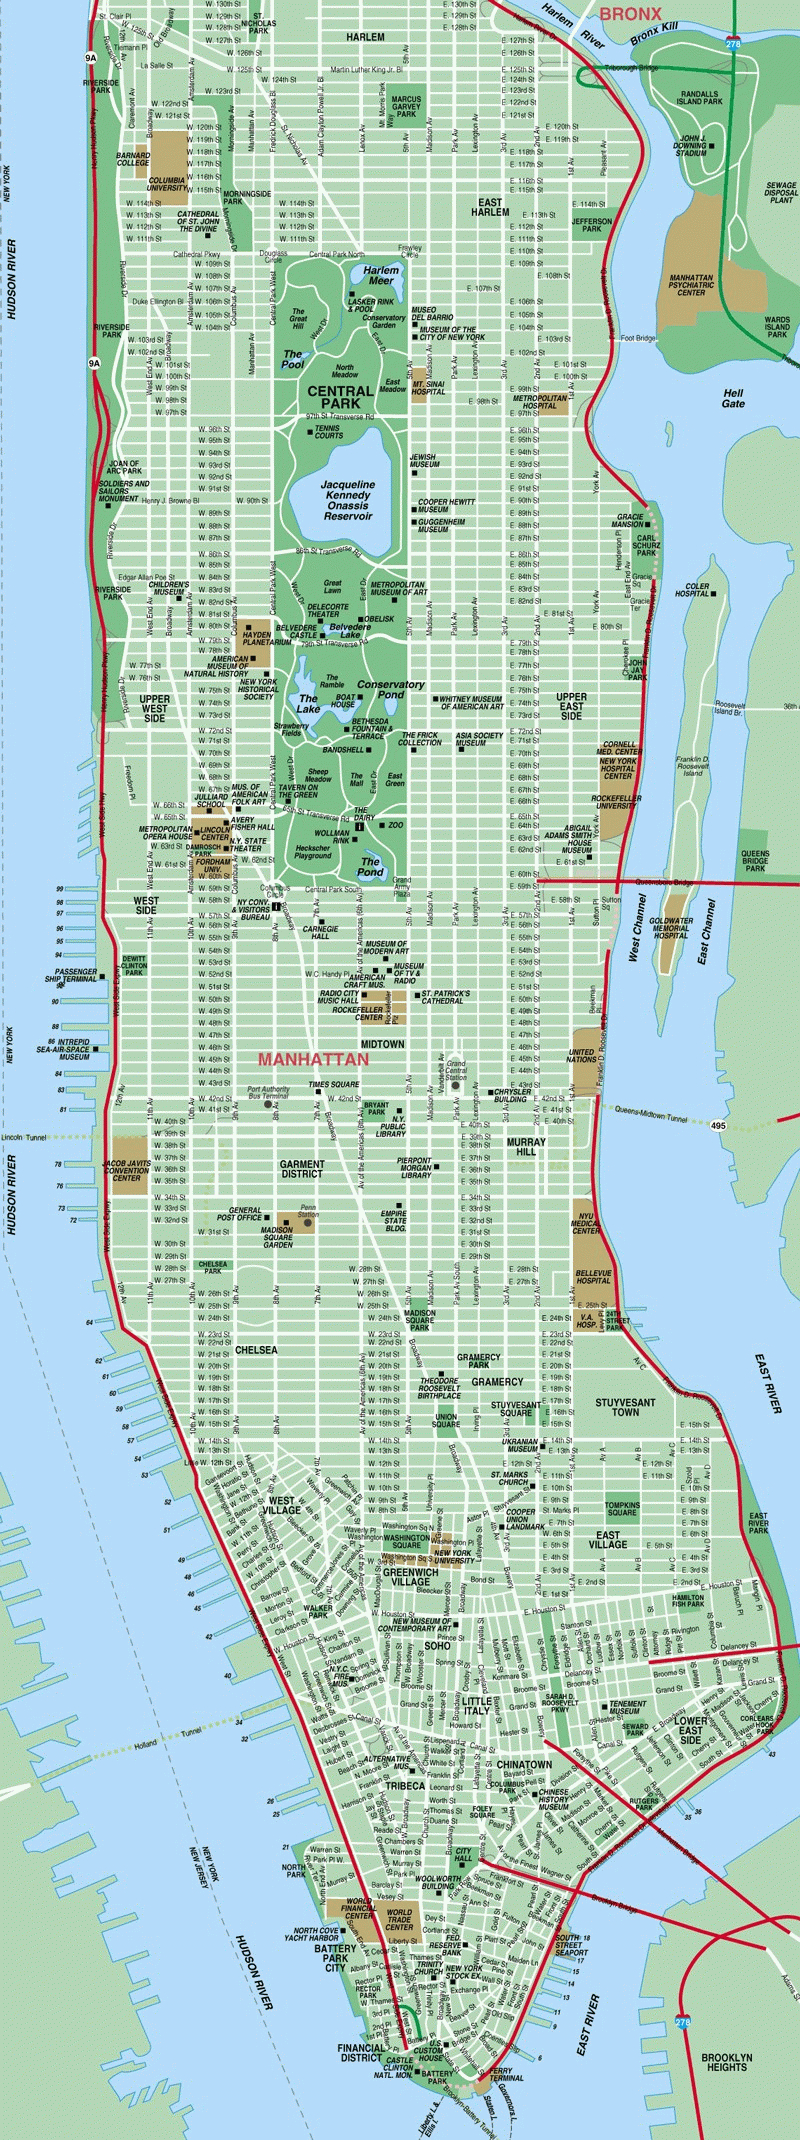 Download Printable Street Map Of New York City Major Tourist Inside - Street Map Of New York City Printable